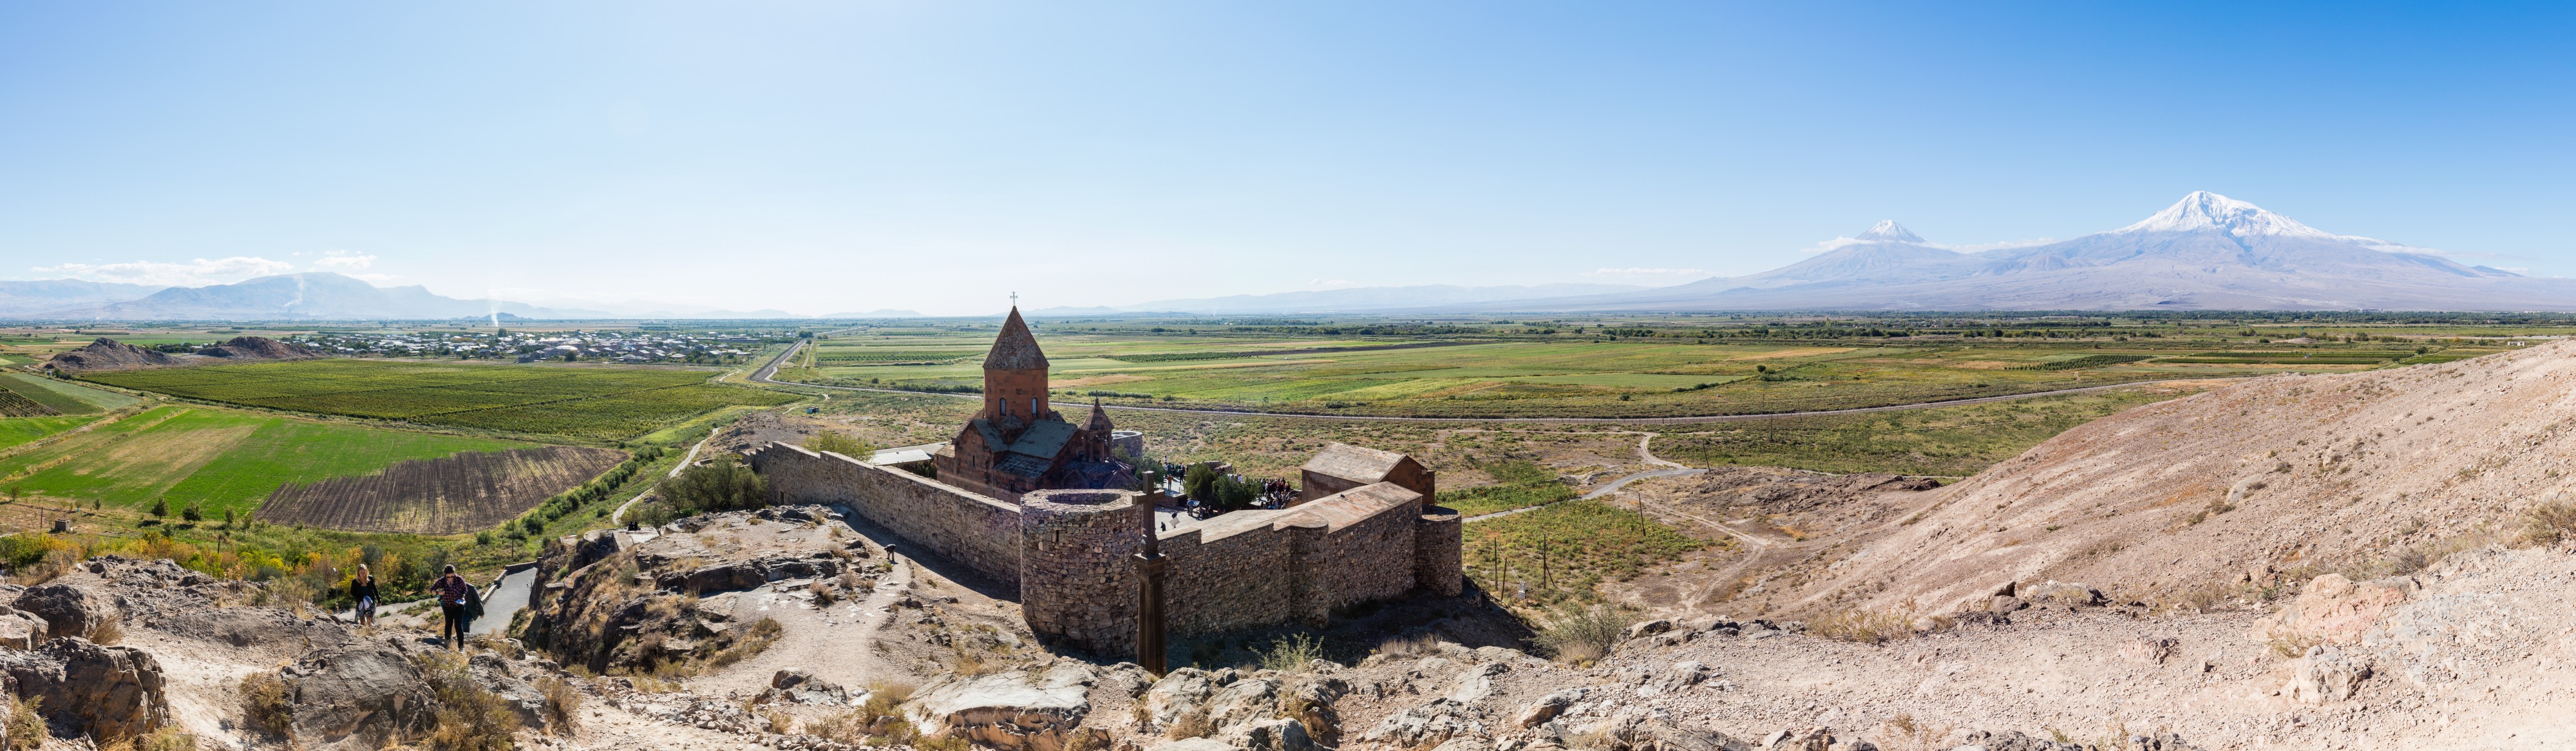 Monasterio Khor Virap, Armenia, 2016-10-01, DD 15-18 PAN